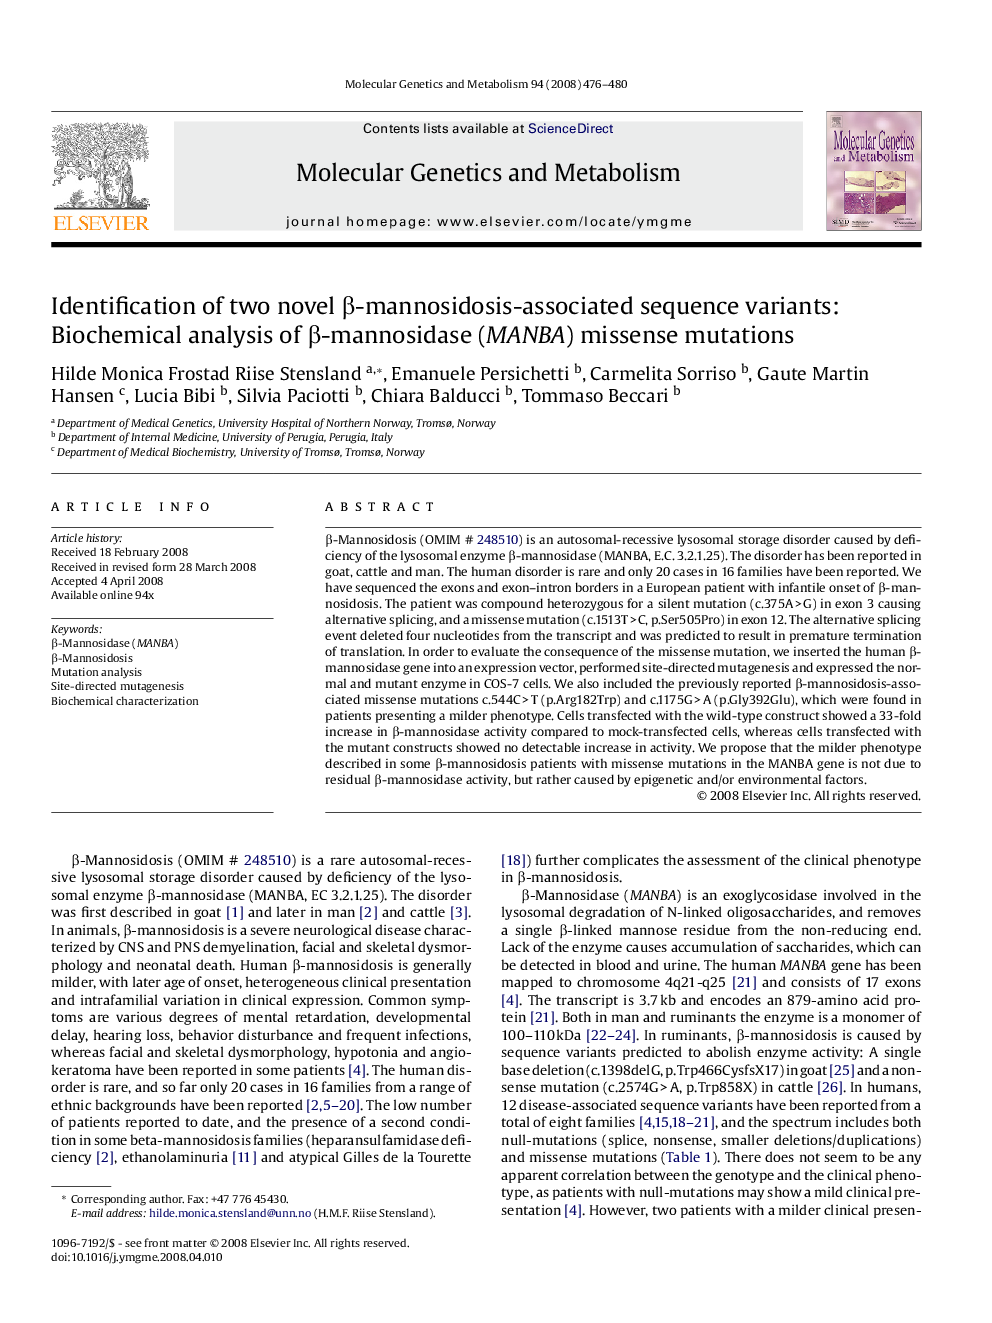 Identification of two novel Î²-mannosidosis-associated sequence variants: Biochemical analysis of Î²-mannosidase (MANBA) missense mutations